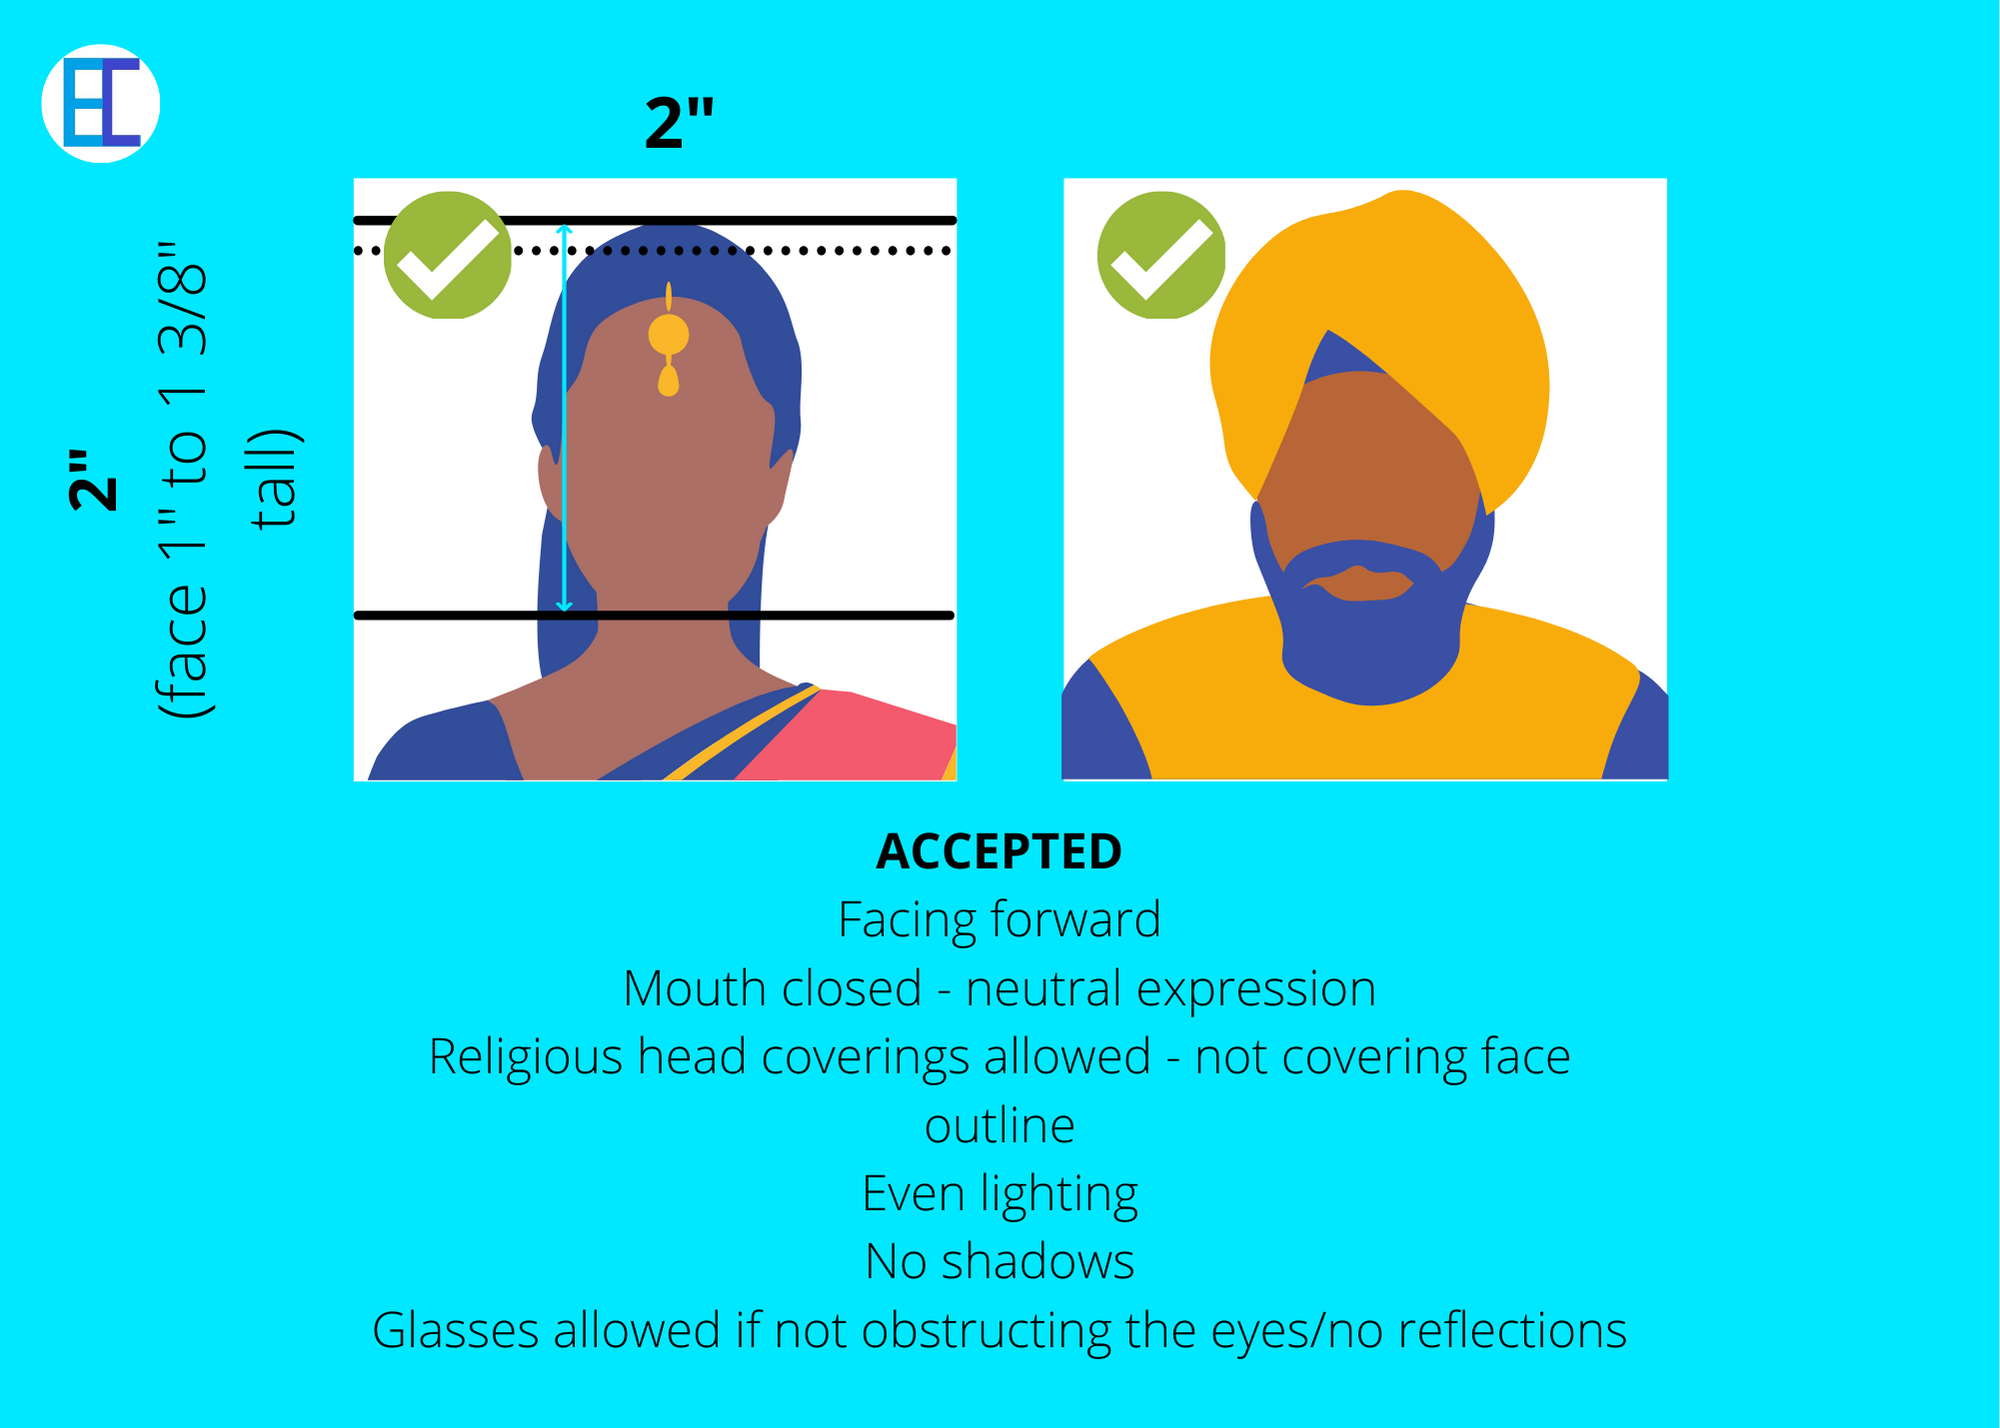 Indian Passport Photo Requirements